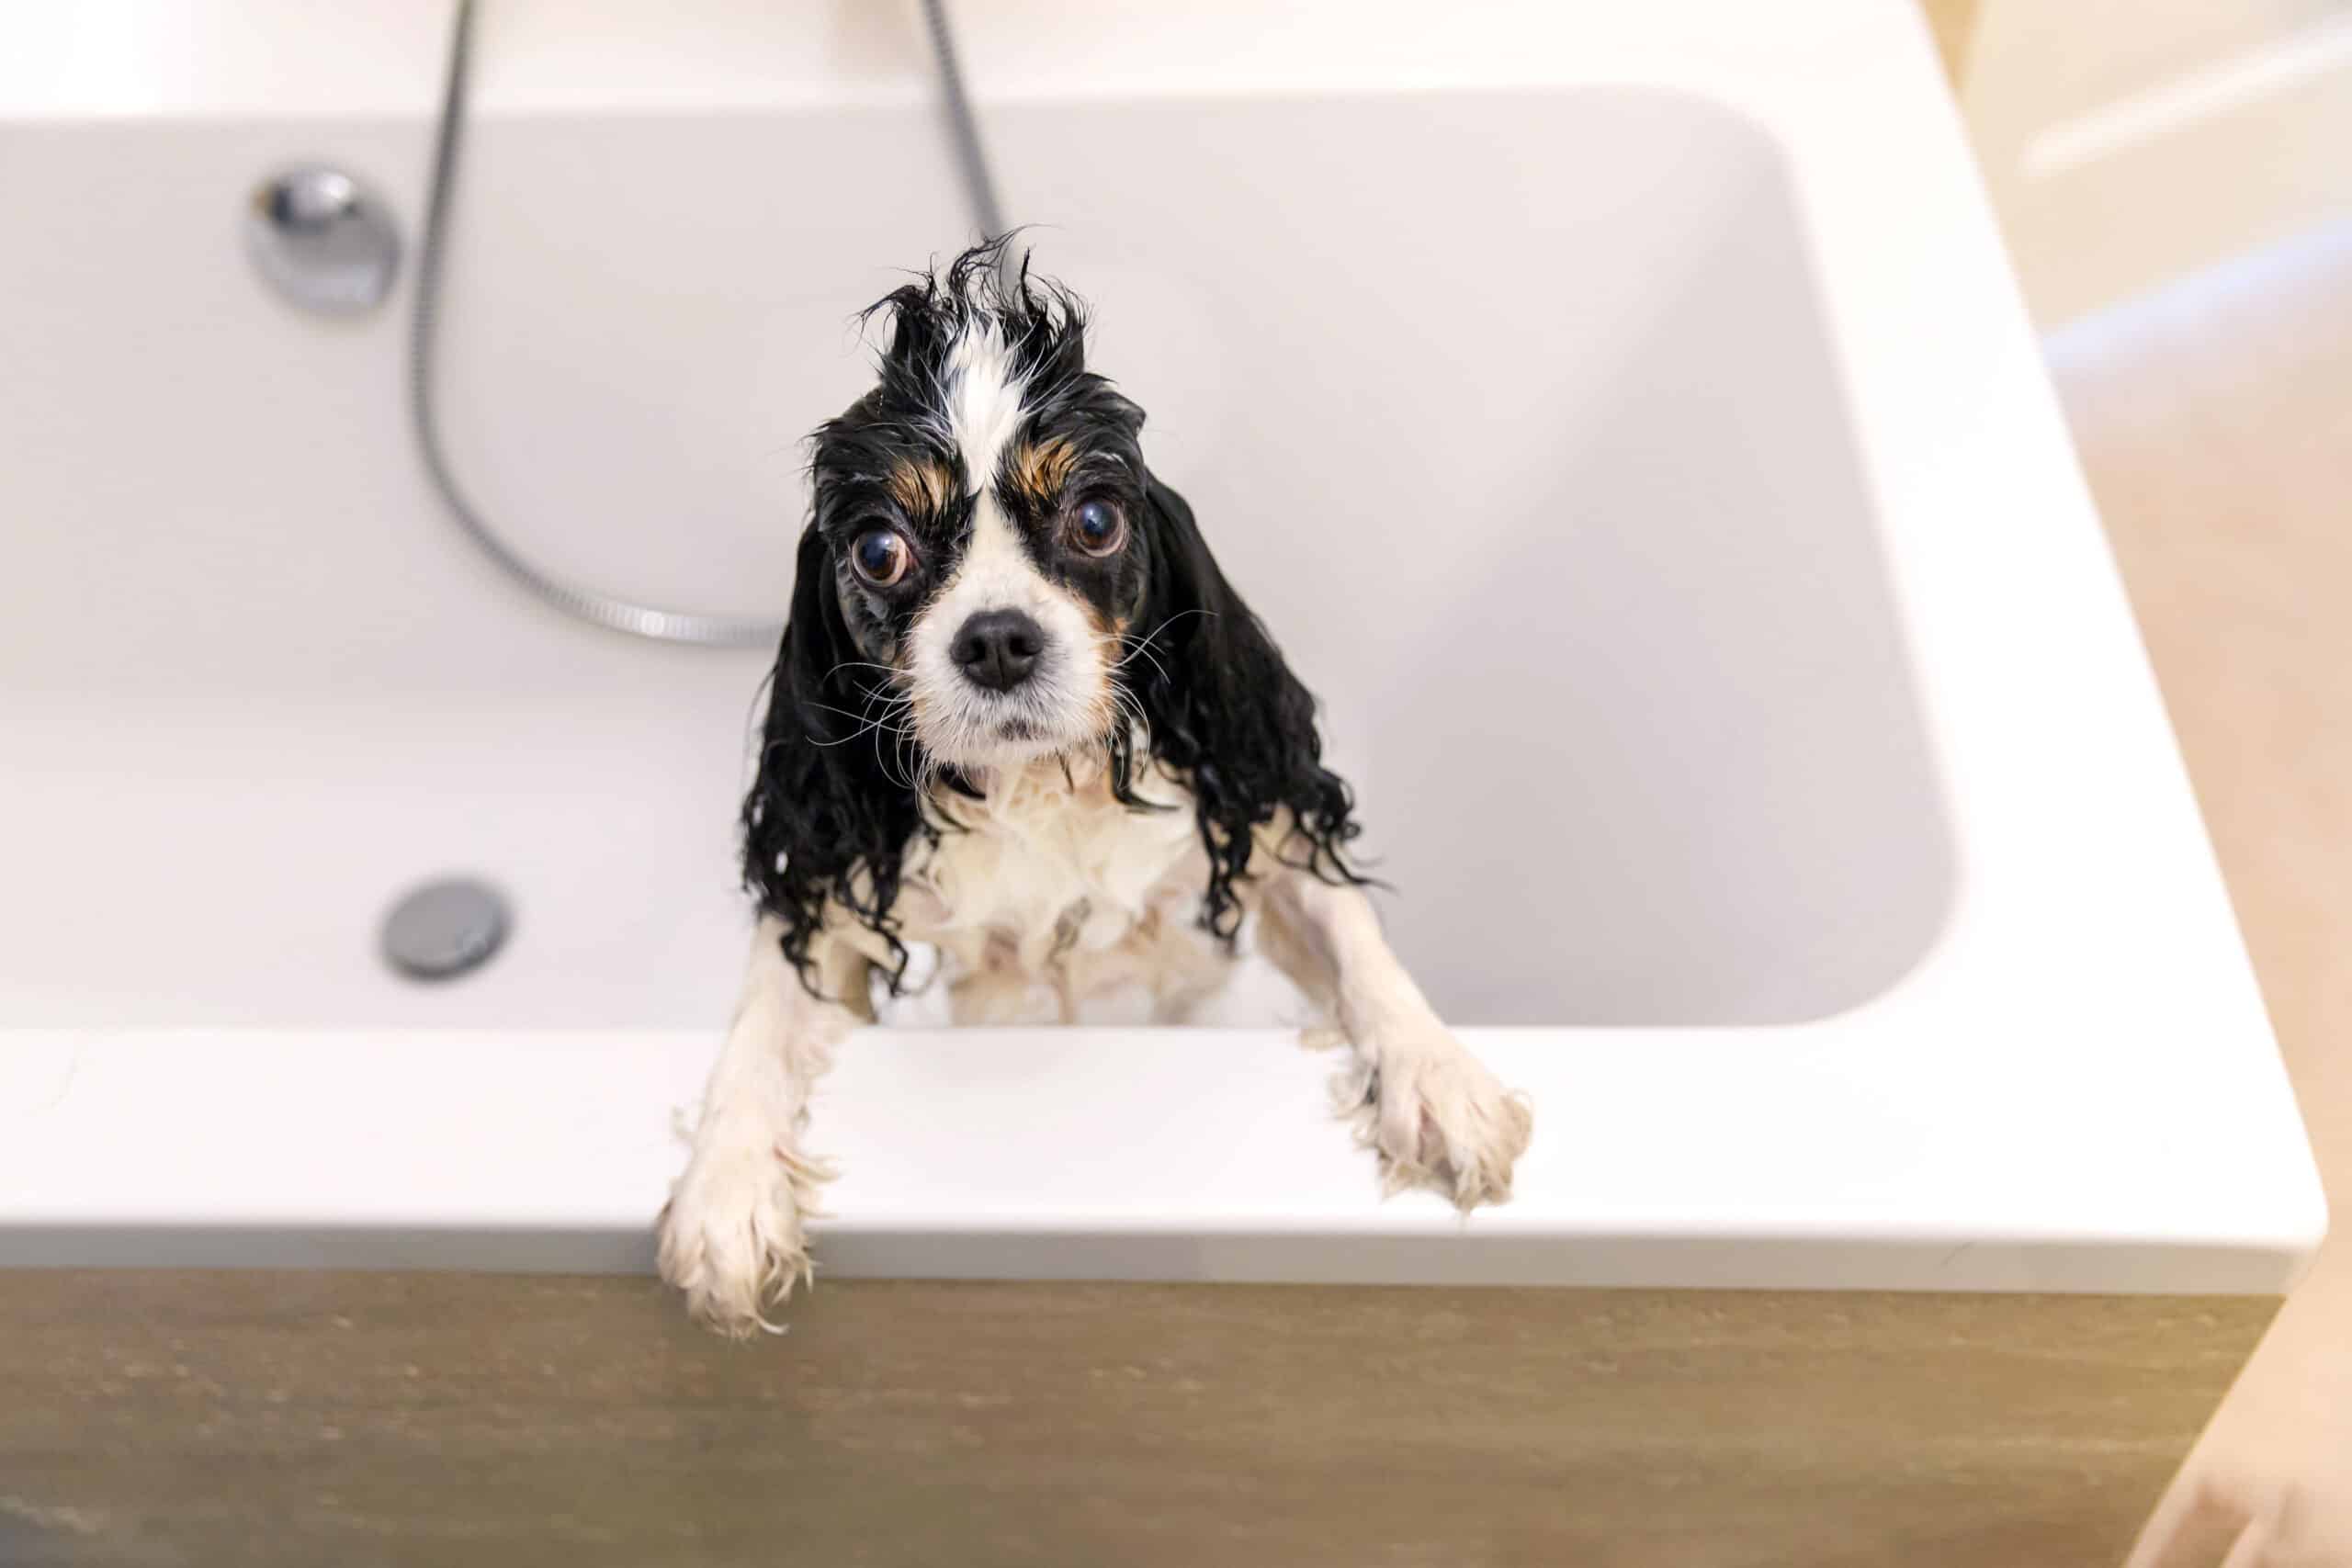 How often do dogs need baths?